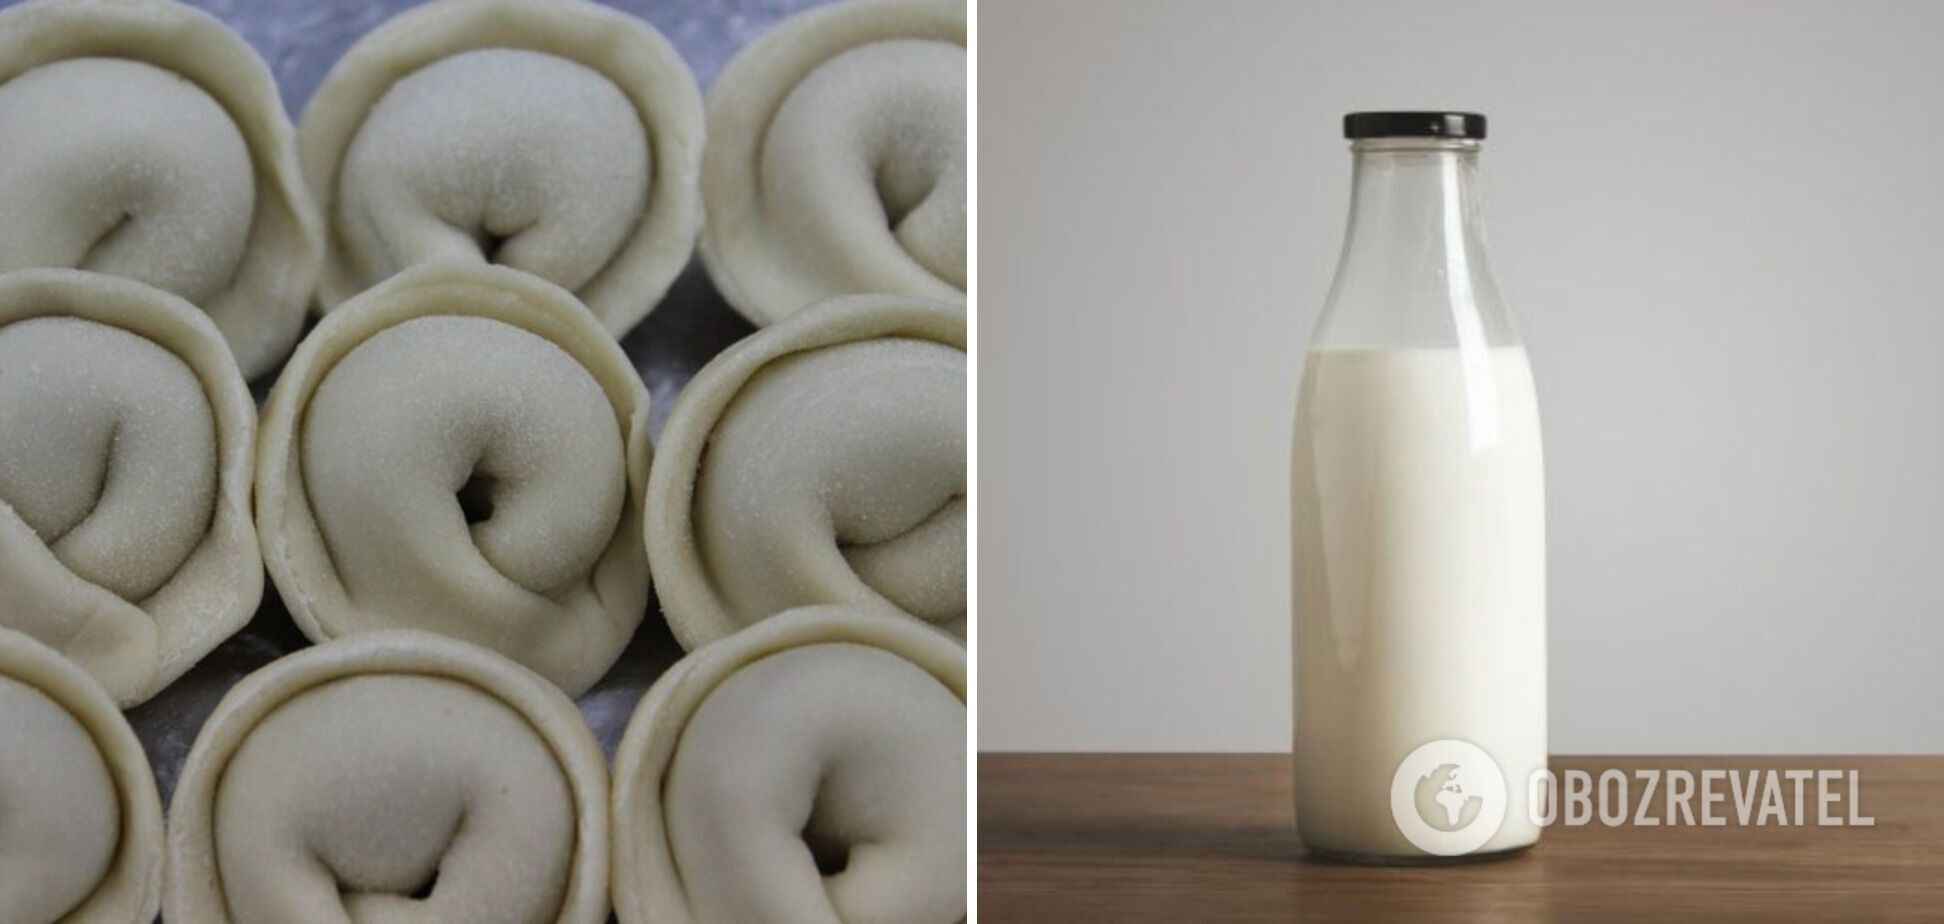 Why add milk to dumpling dough